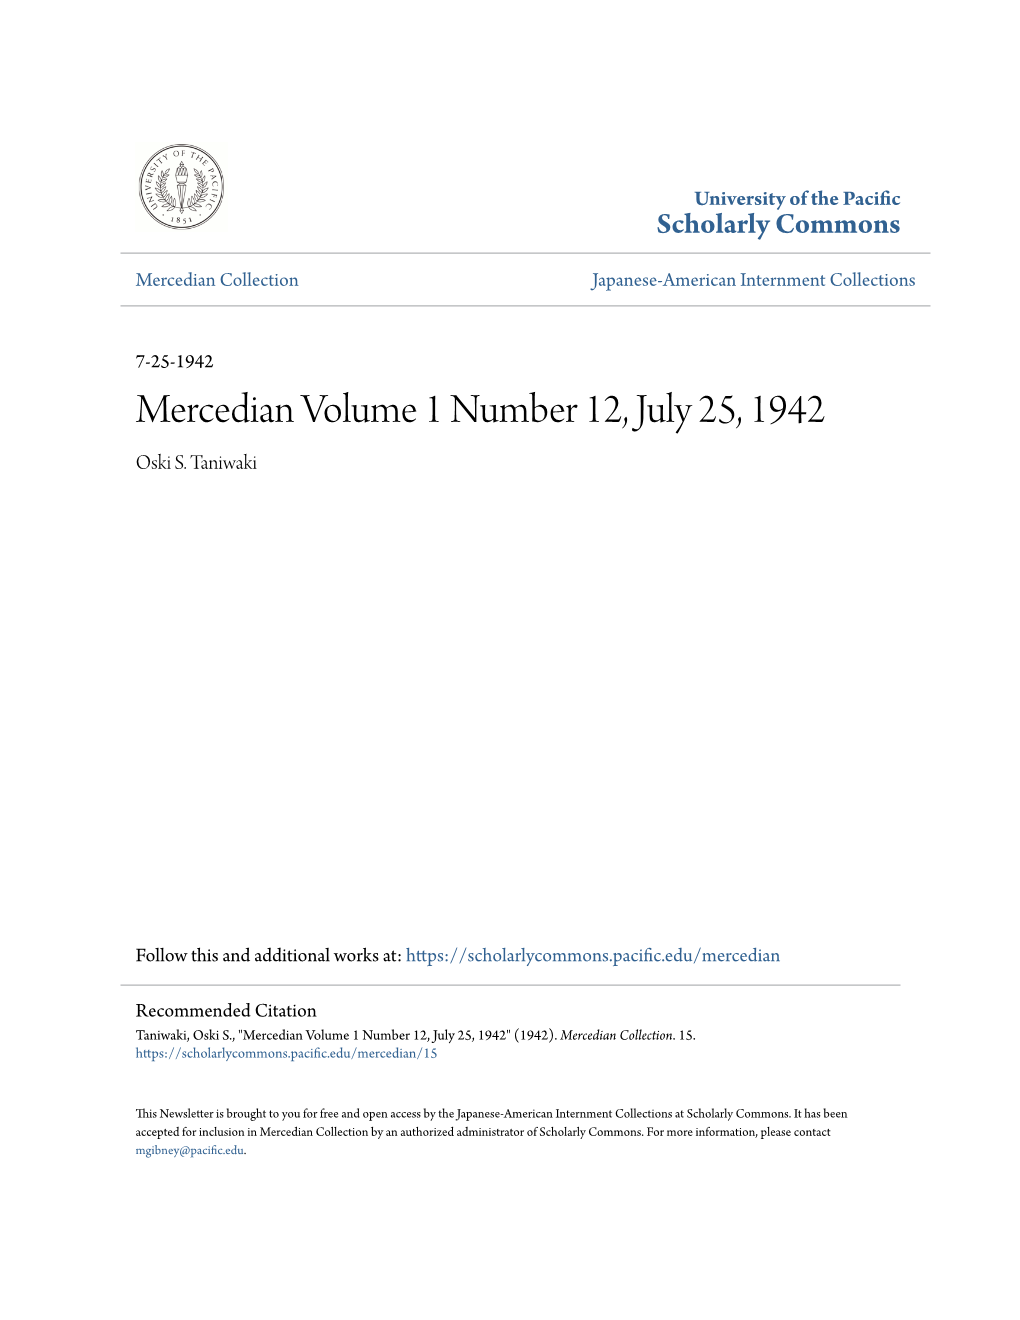 Mercedian Volume 1 Number 12, July 25, 1942 Oski S